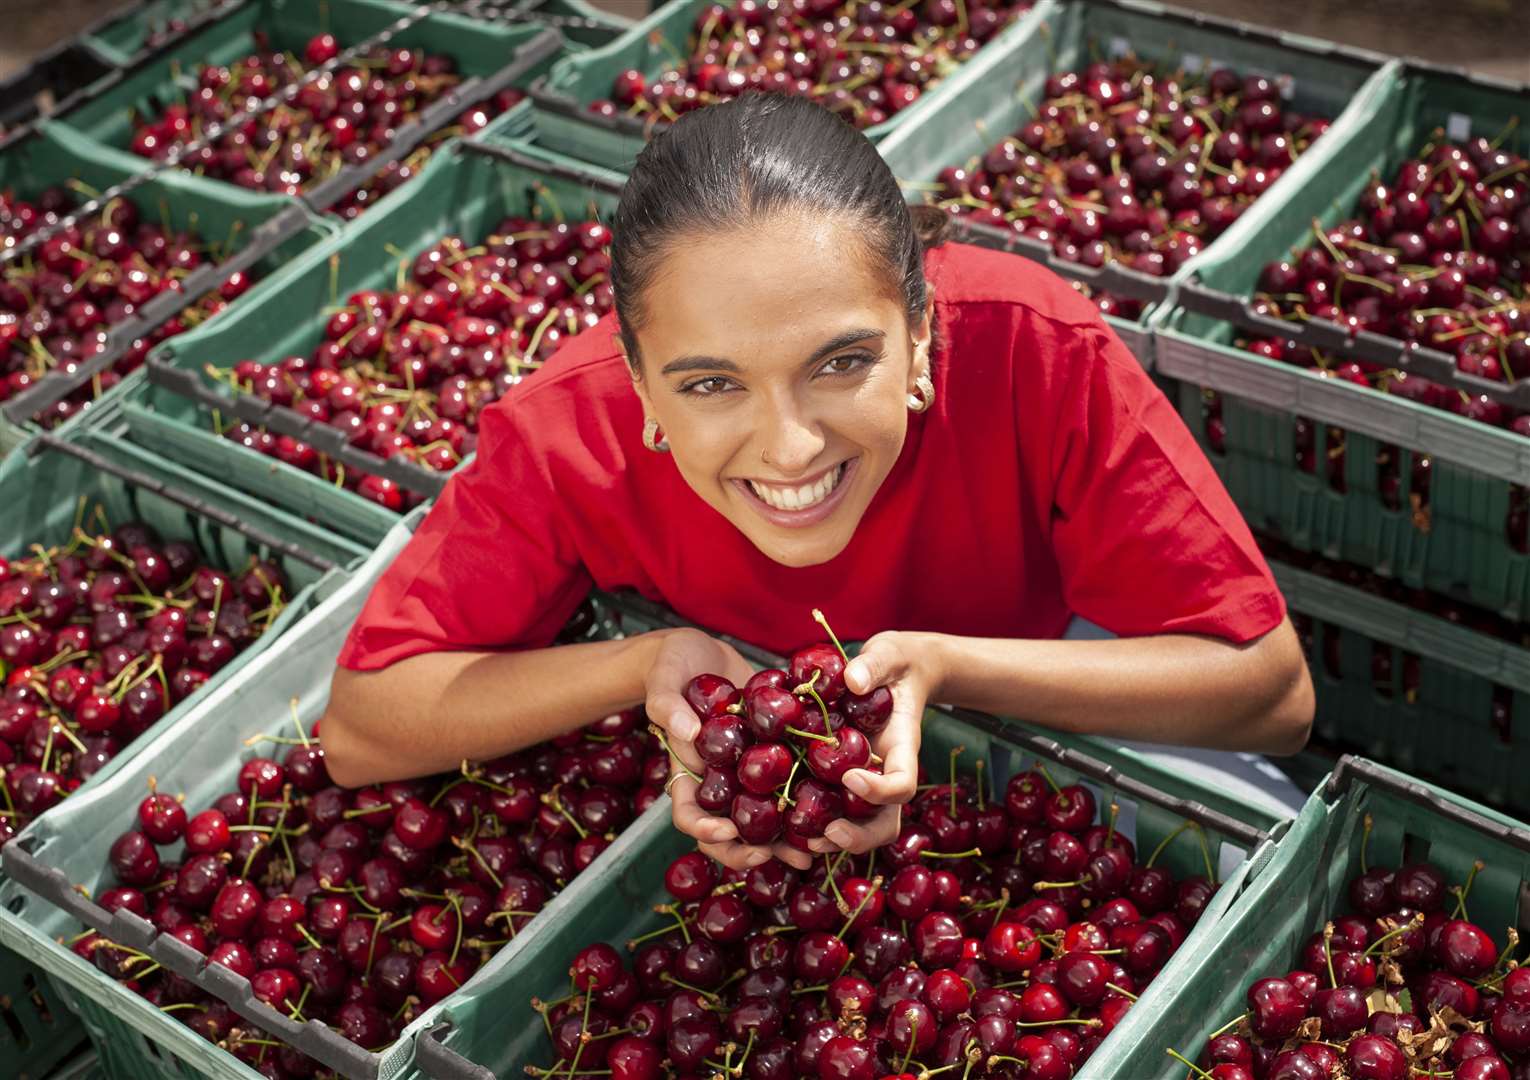 sweet cherries politics farm stands divides